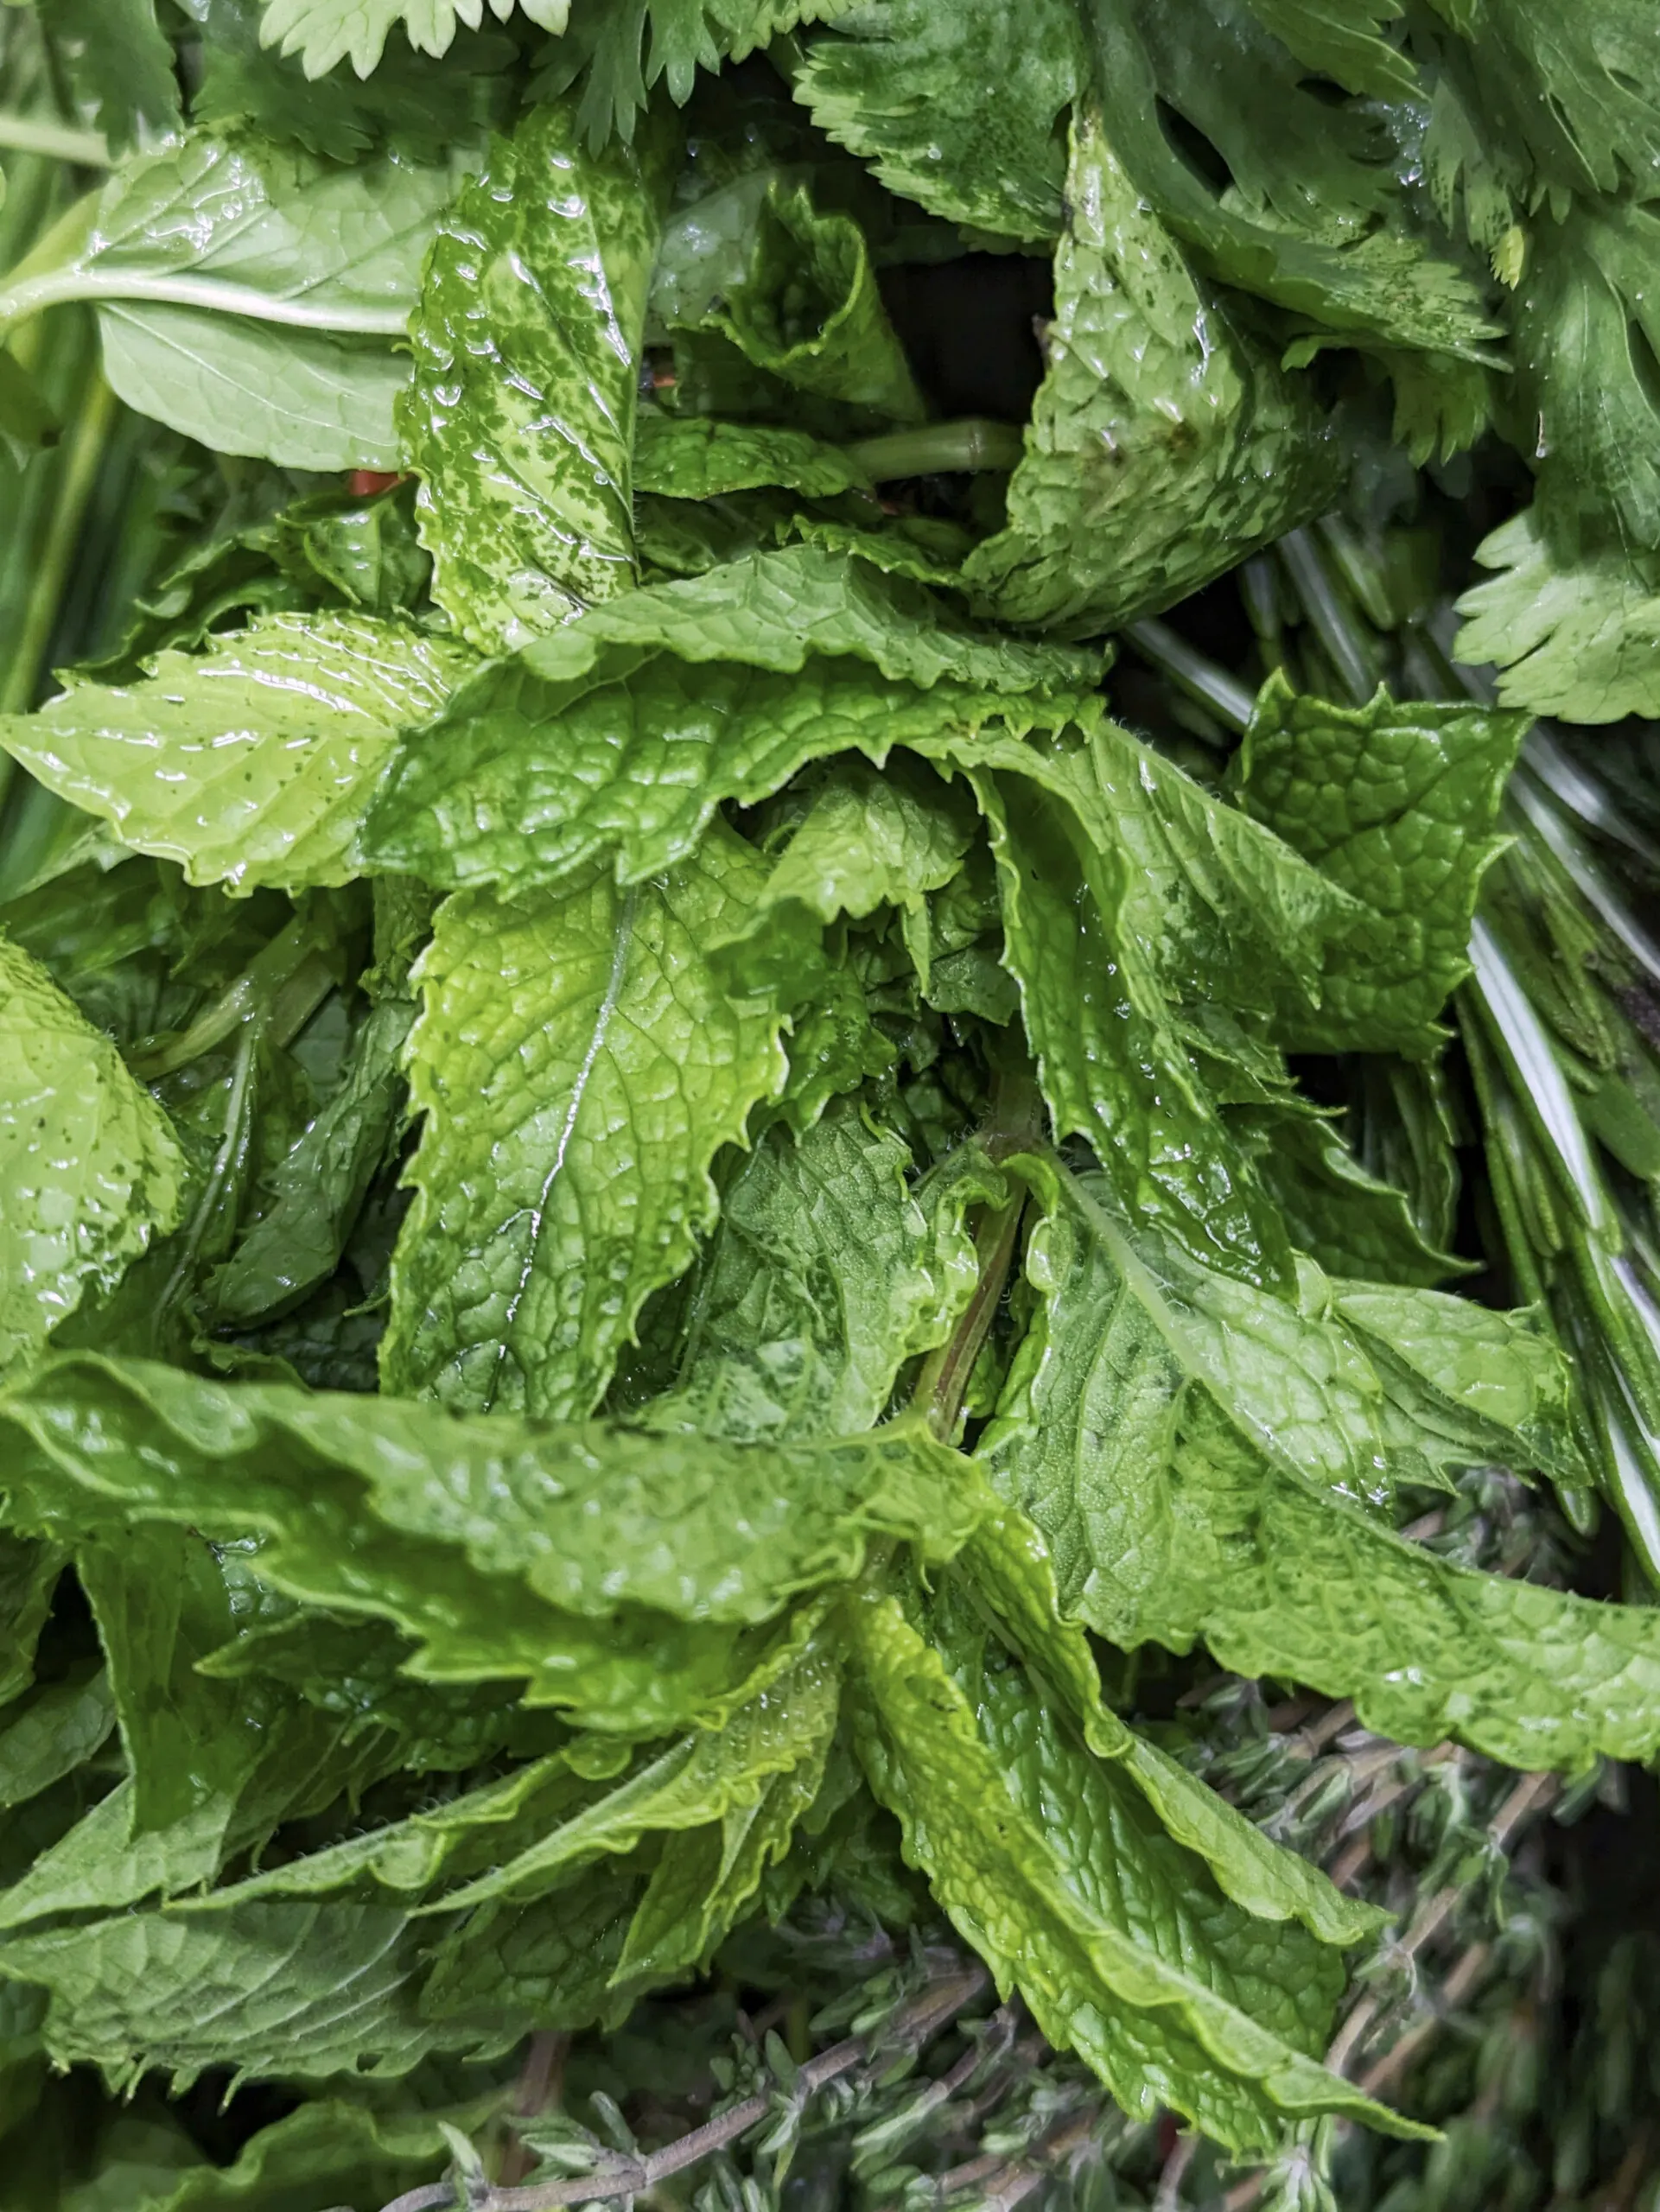 A close up of several mint plants.